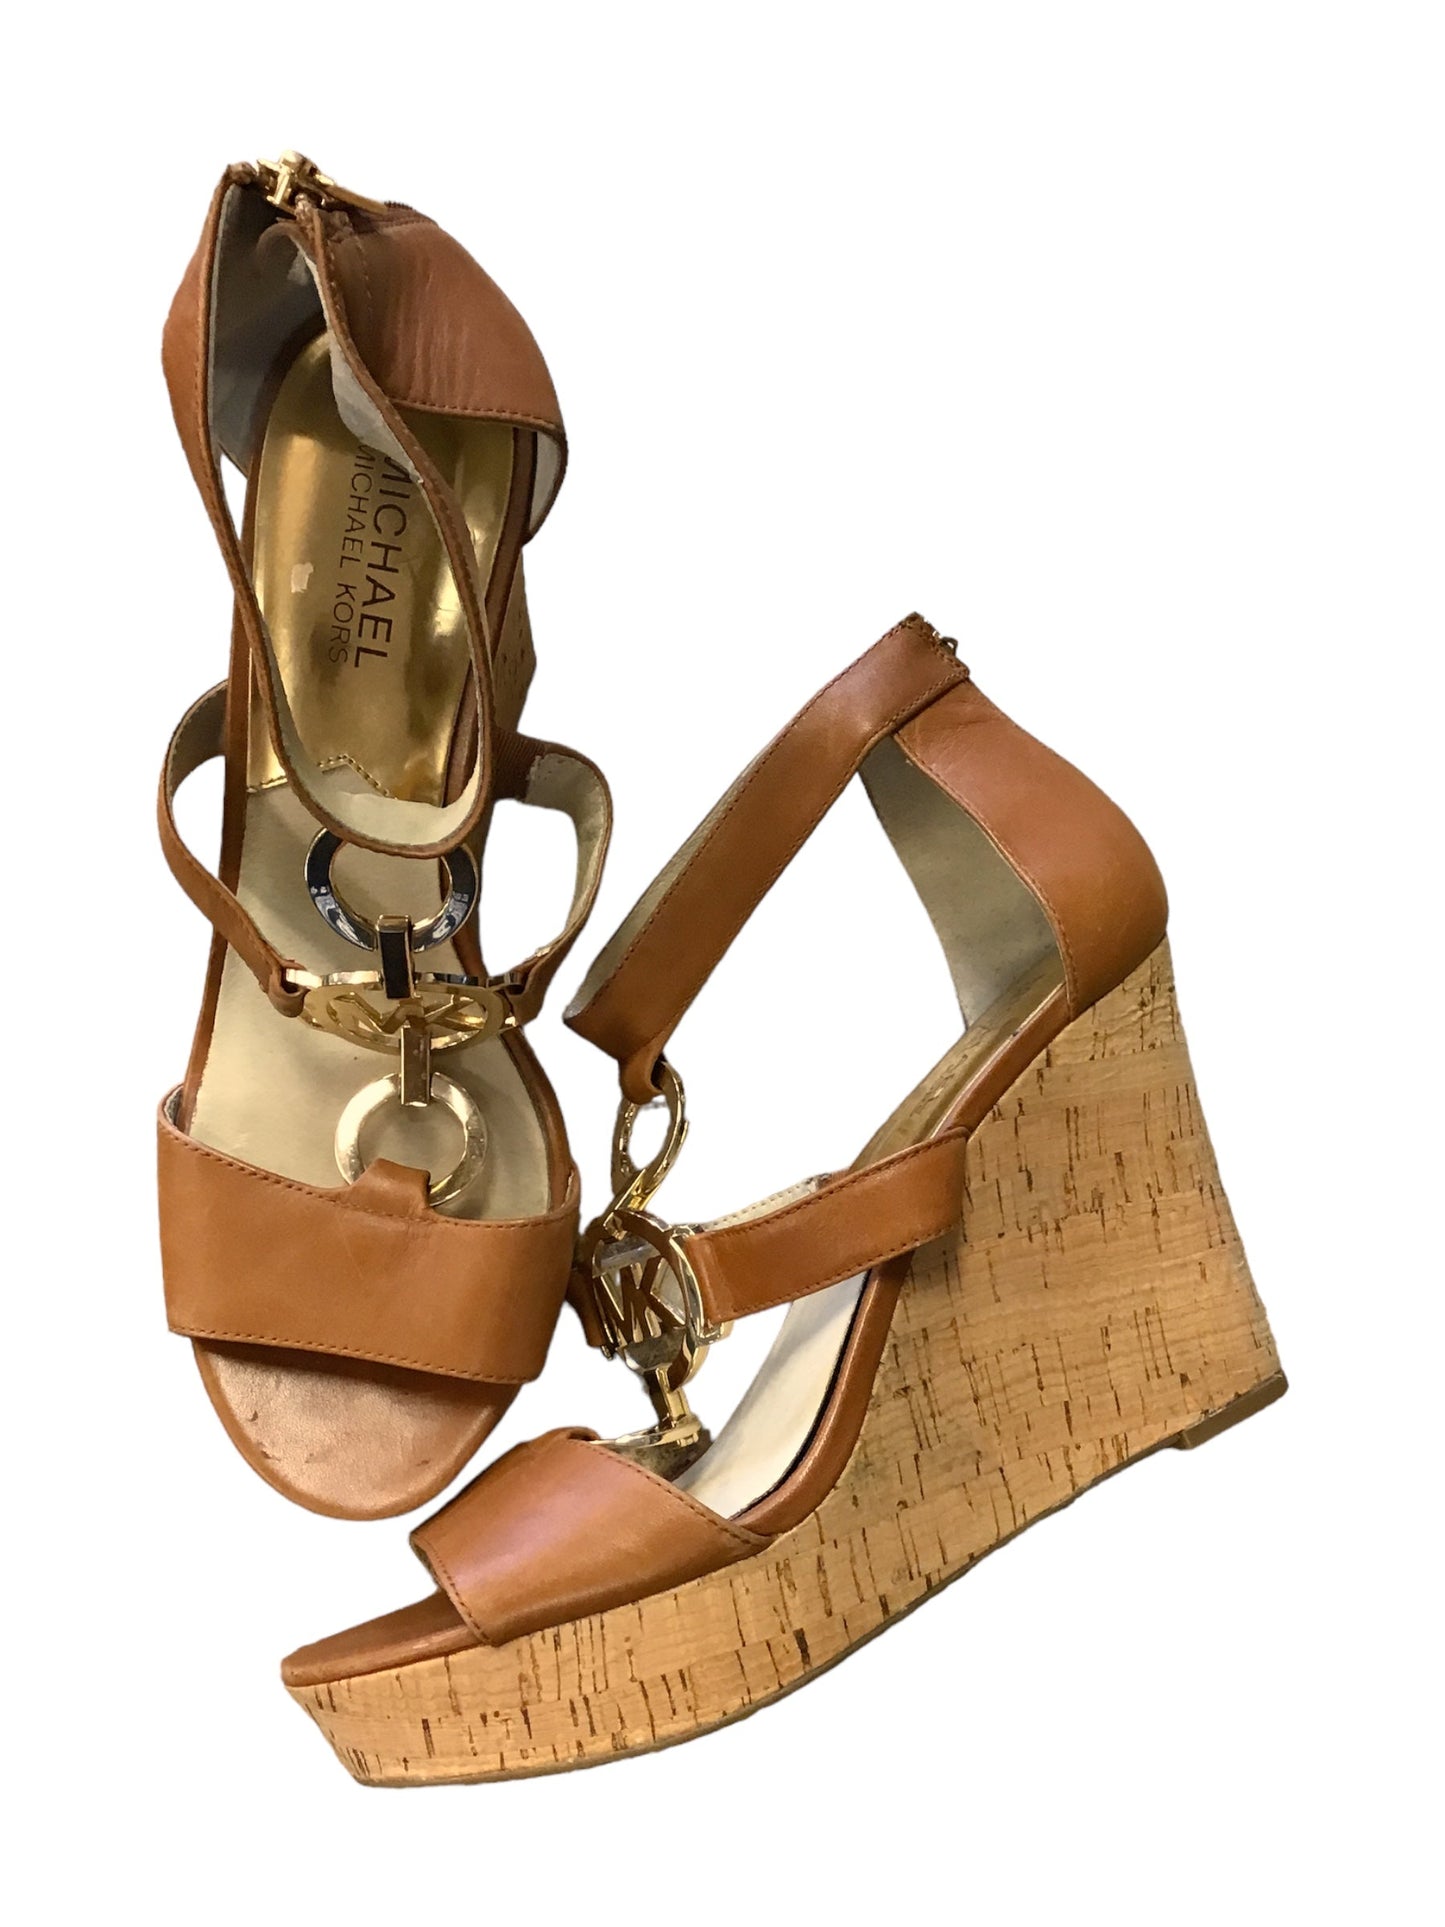 Brown Shoes Heels Platform Michael Kors, Size 8.5